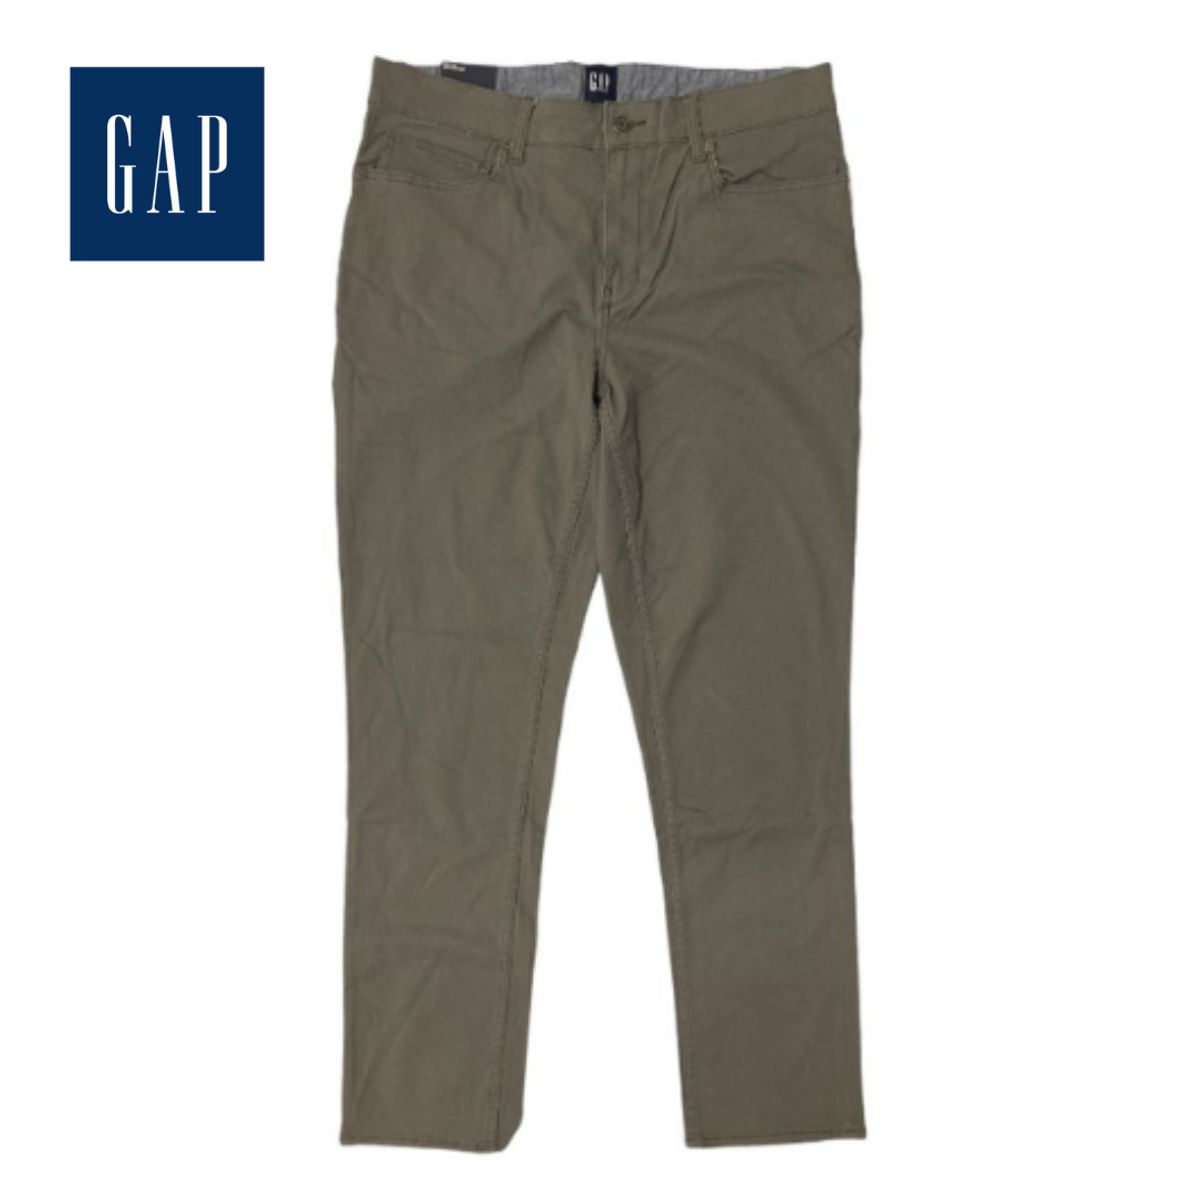 GAP Men's Twill Slim Fit Pant - 40 x 32 - Castlerock